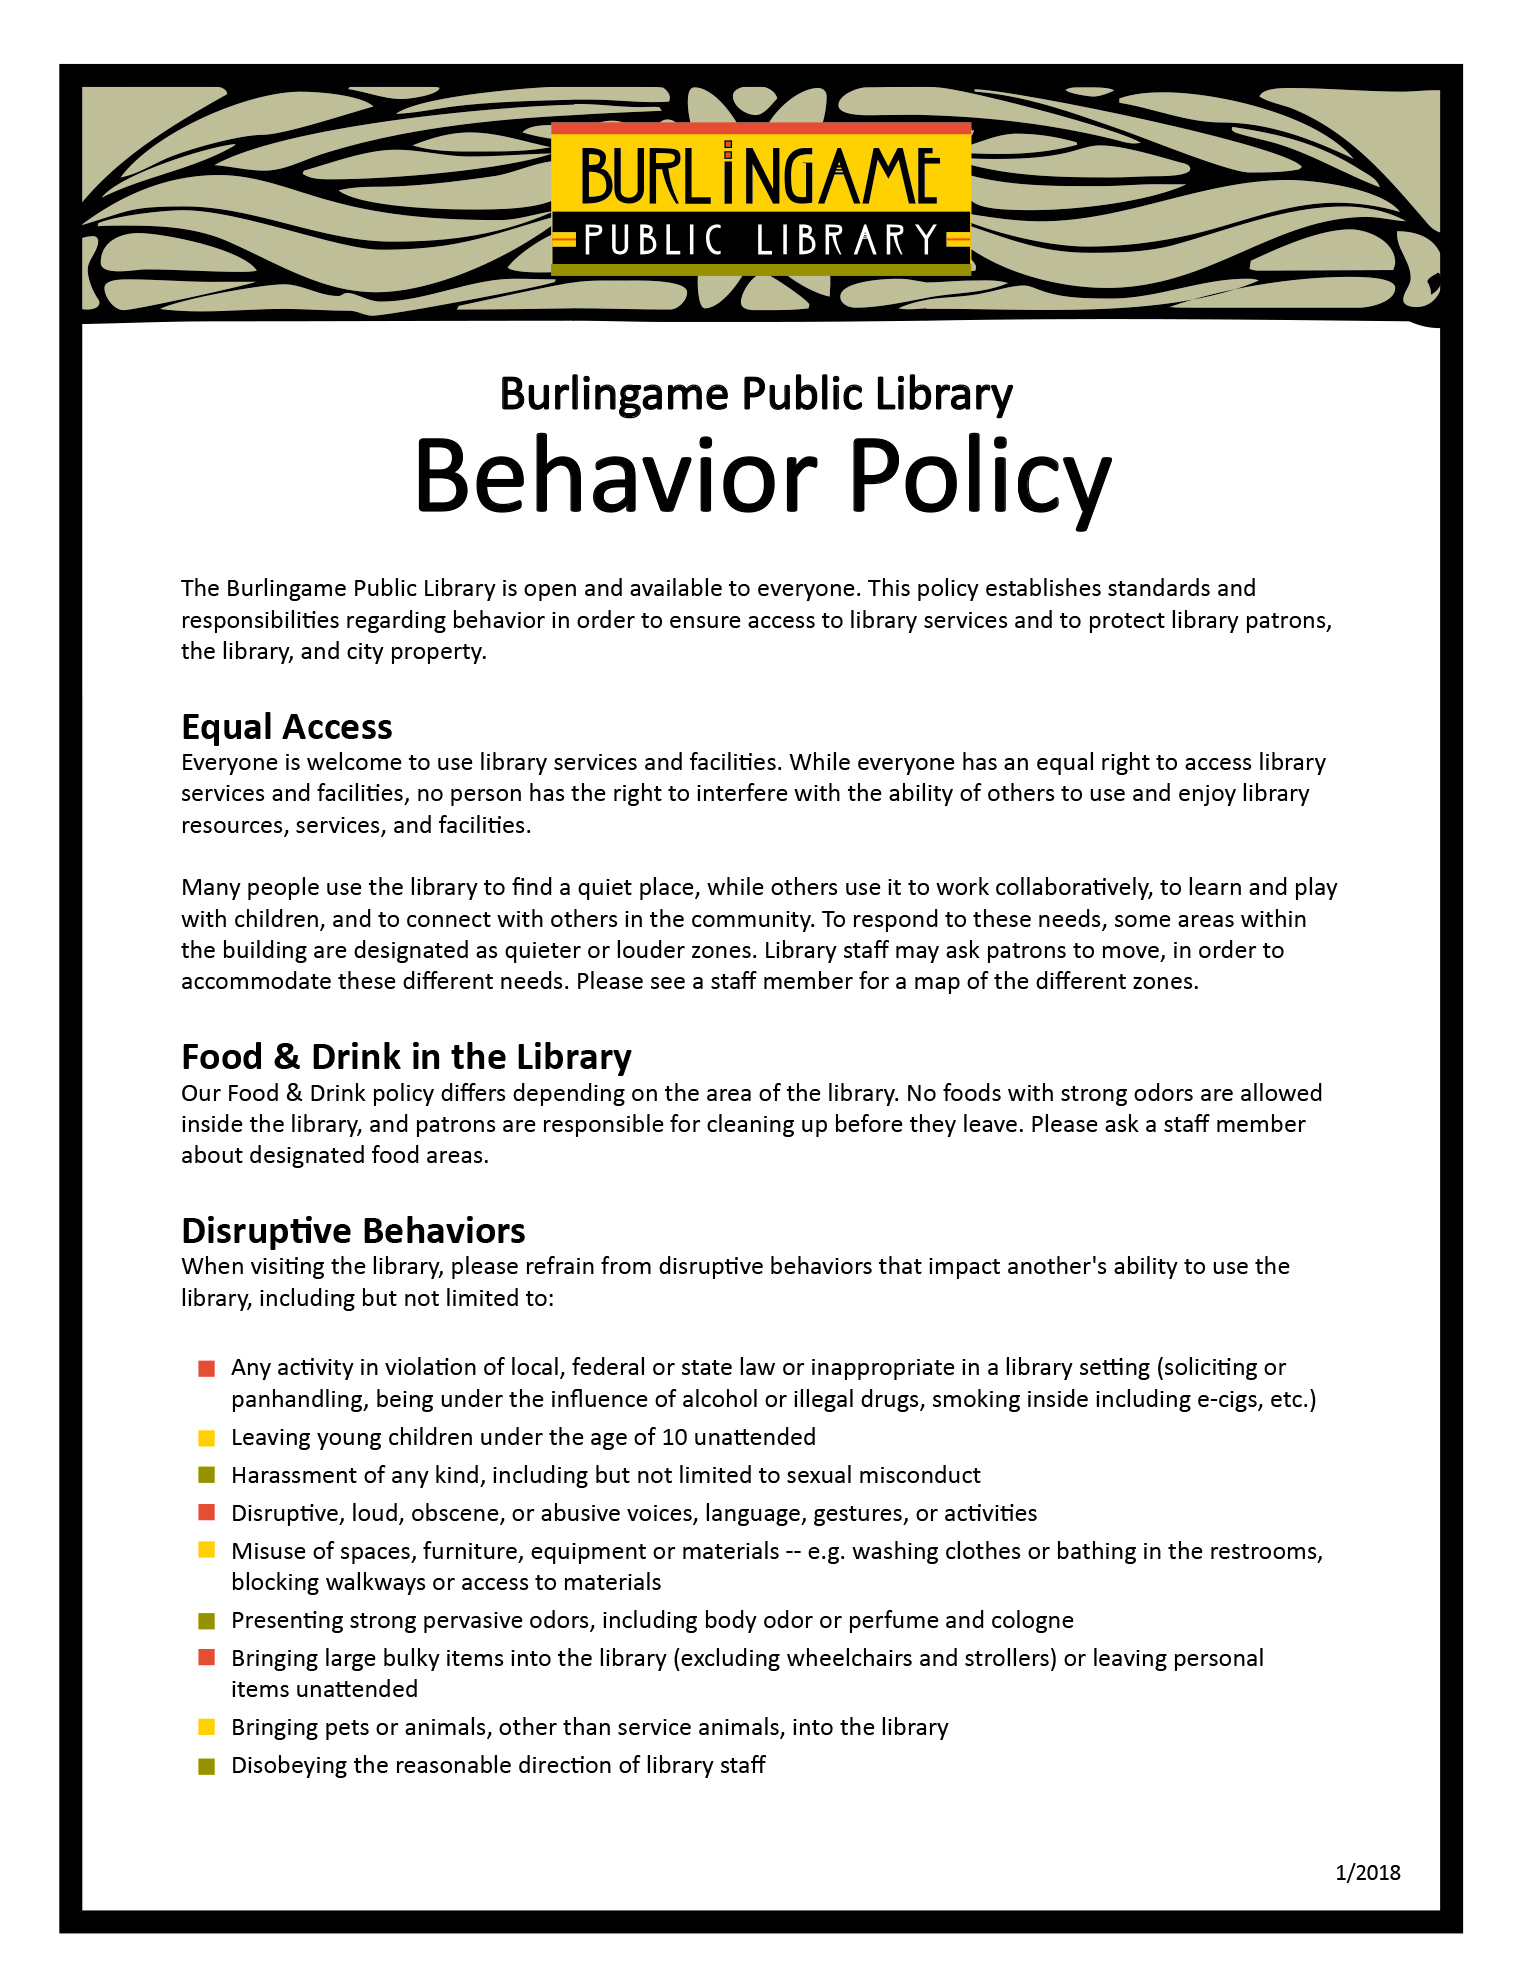 BPL Behavior Policy sign 2018